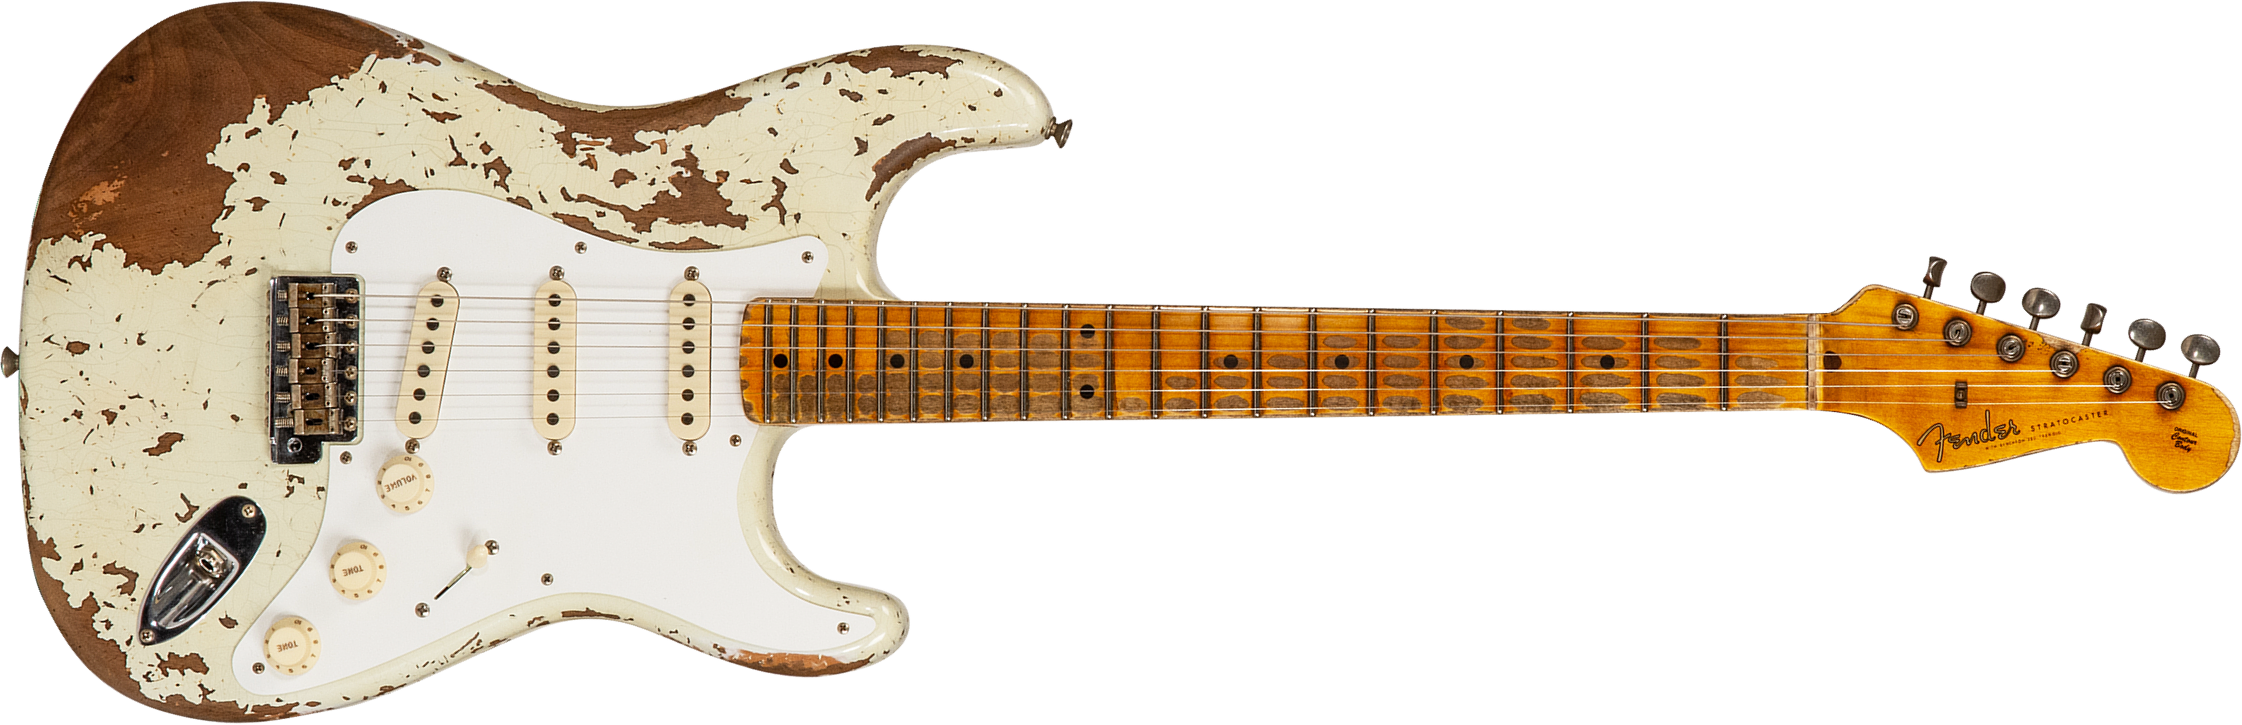 Fender Custom Shop Strat 1956 3s Trem Mn #cz568636 - Super Heavy Relic Aged India Ivory - E-Gitarre in Str-Form - Main picture